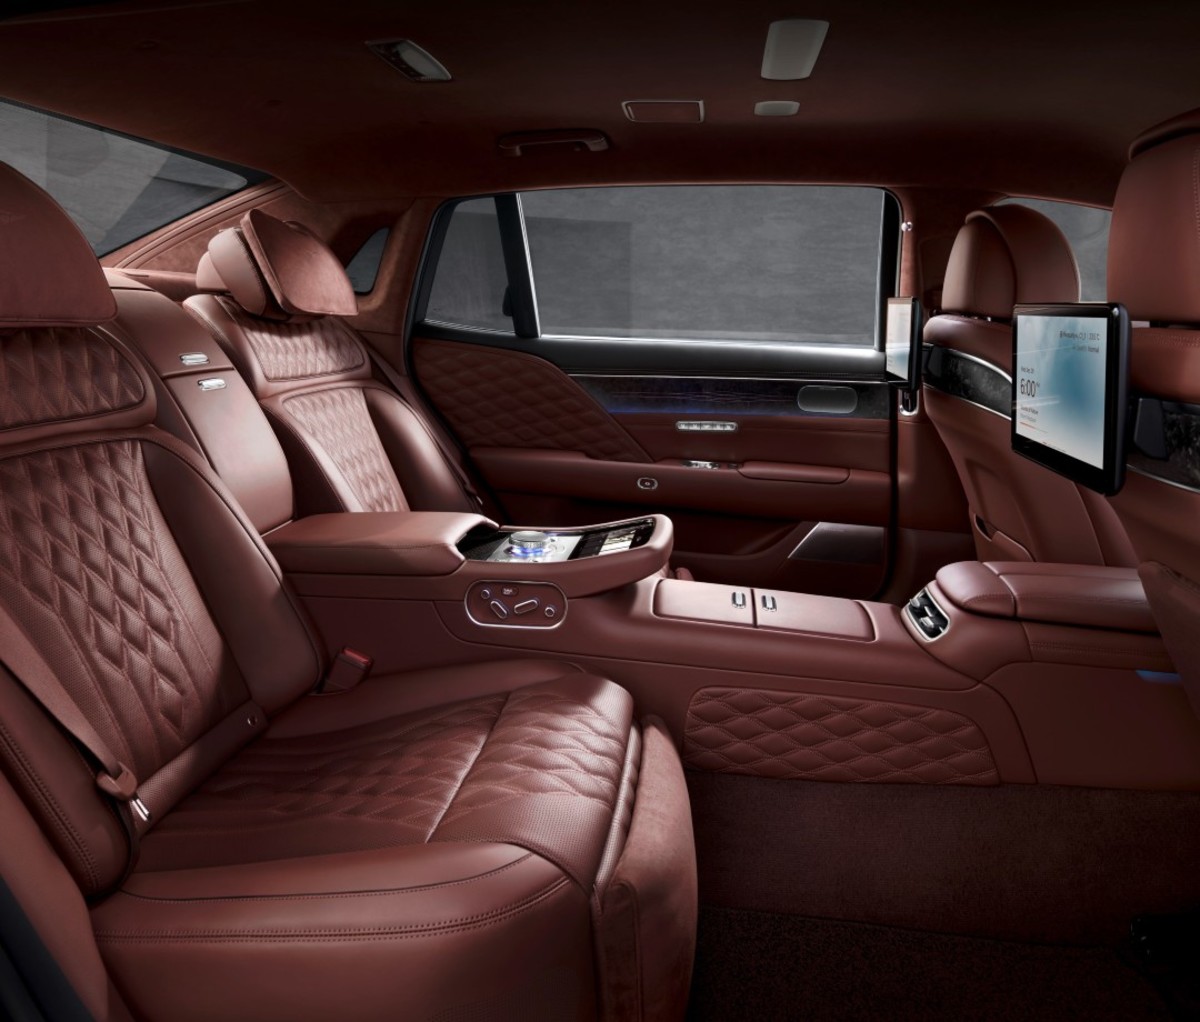 Interior of luxury sedan